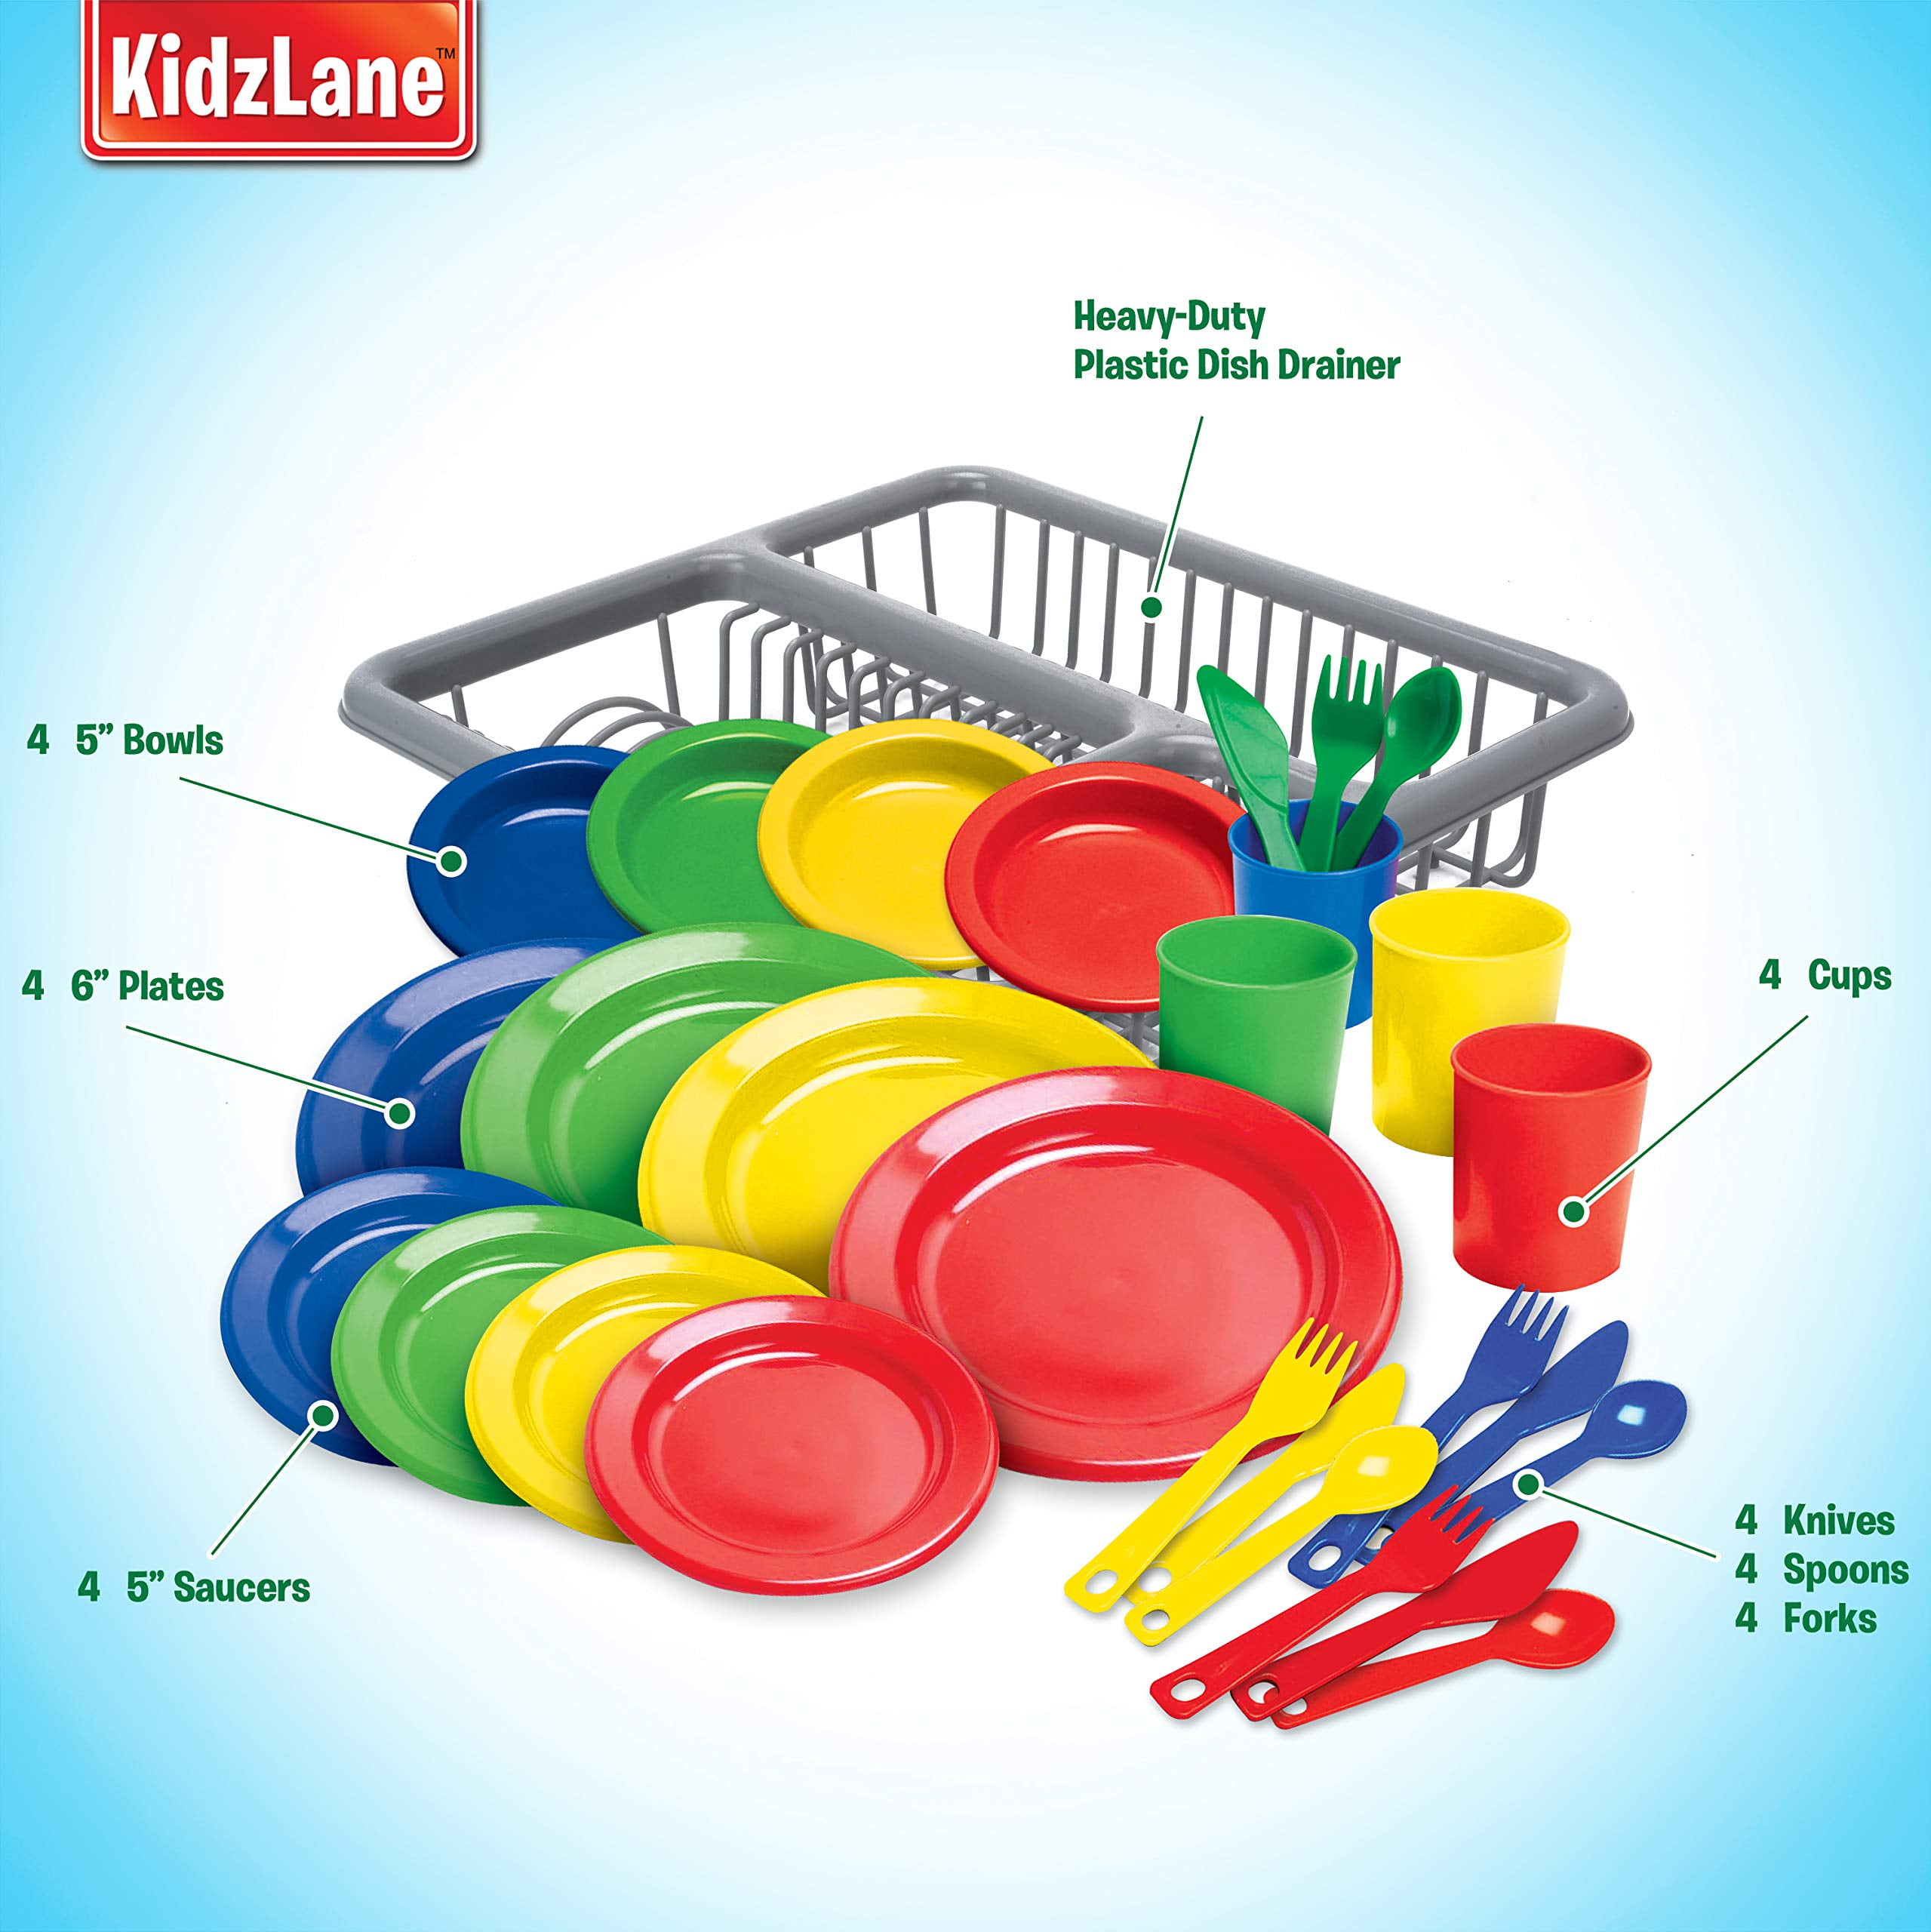 Kidzlane Pots and Pans Playset for Kids